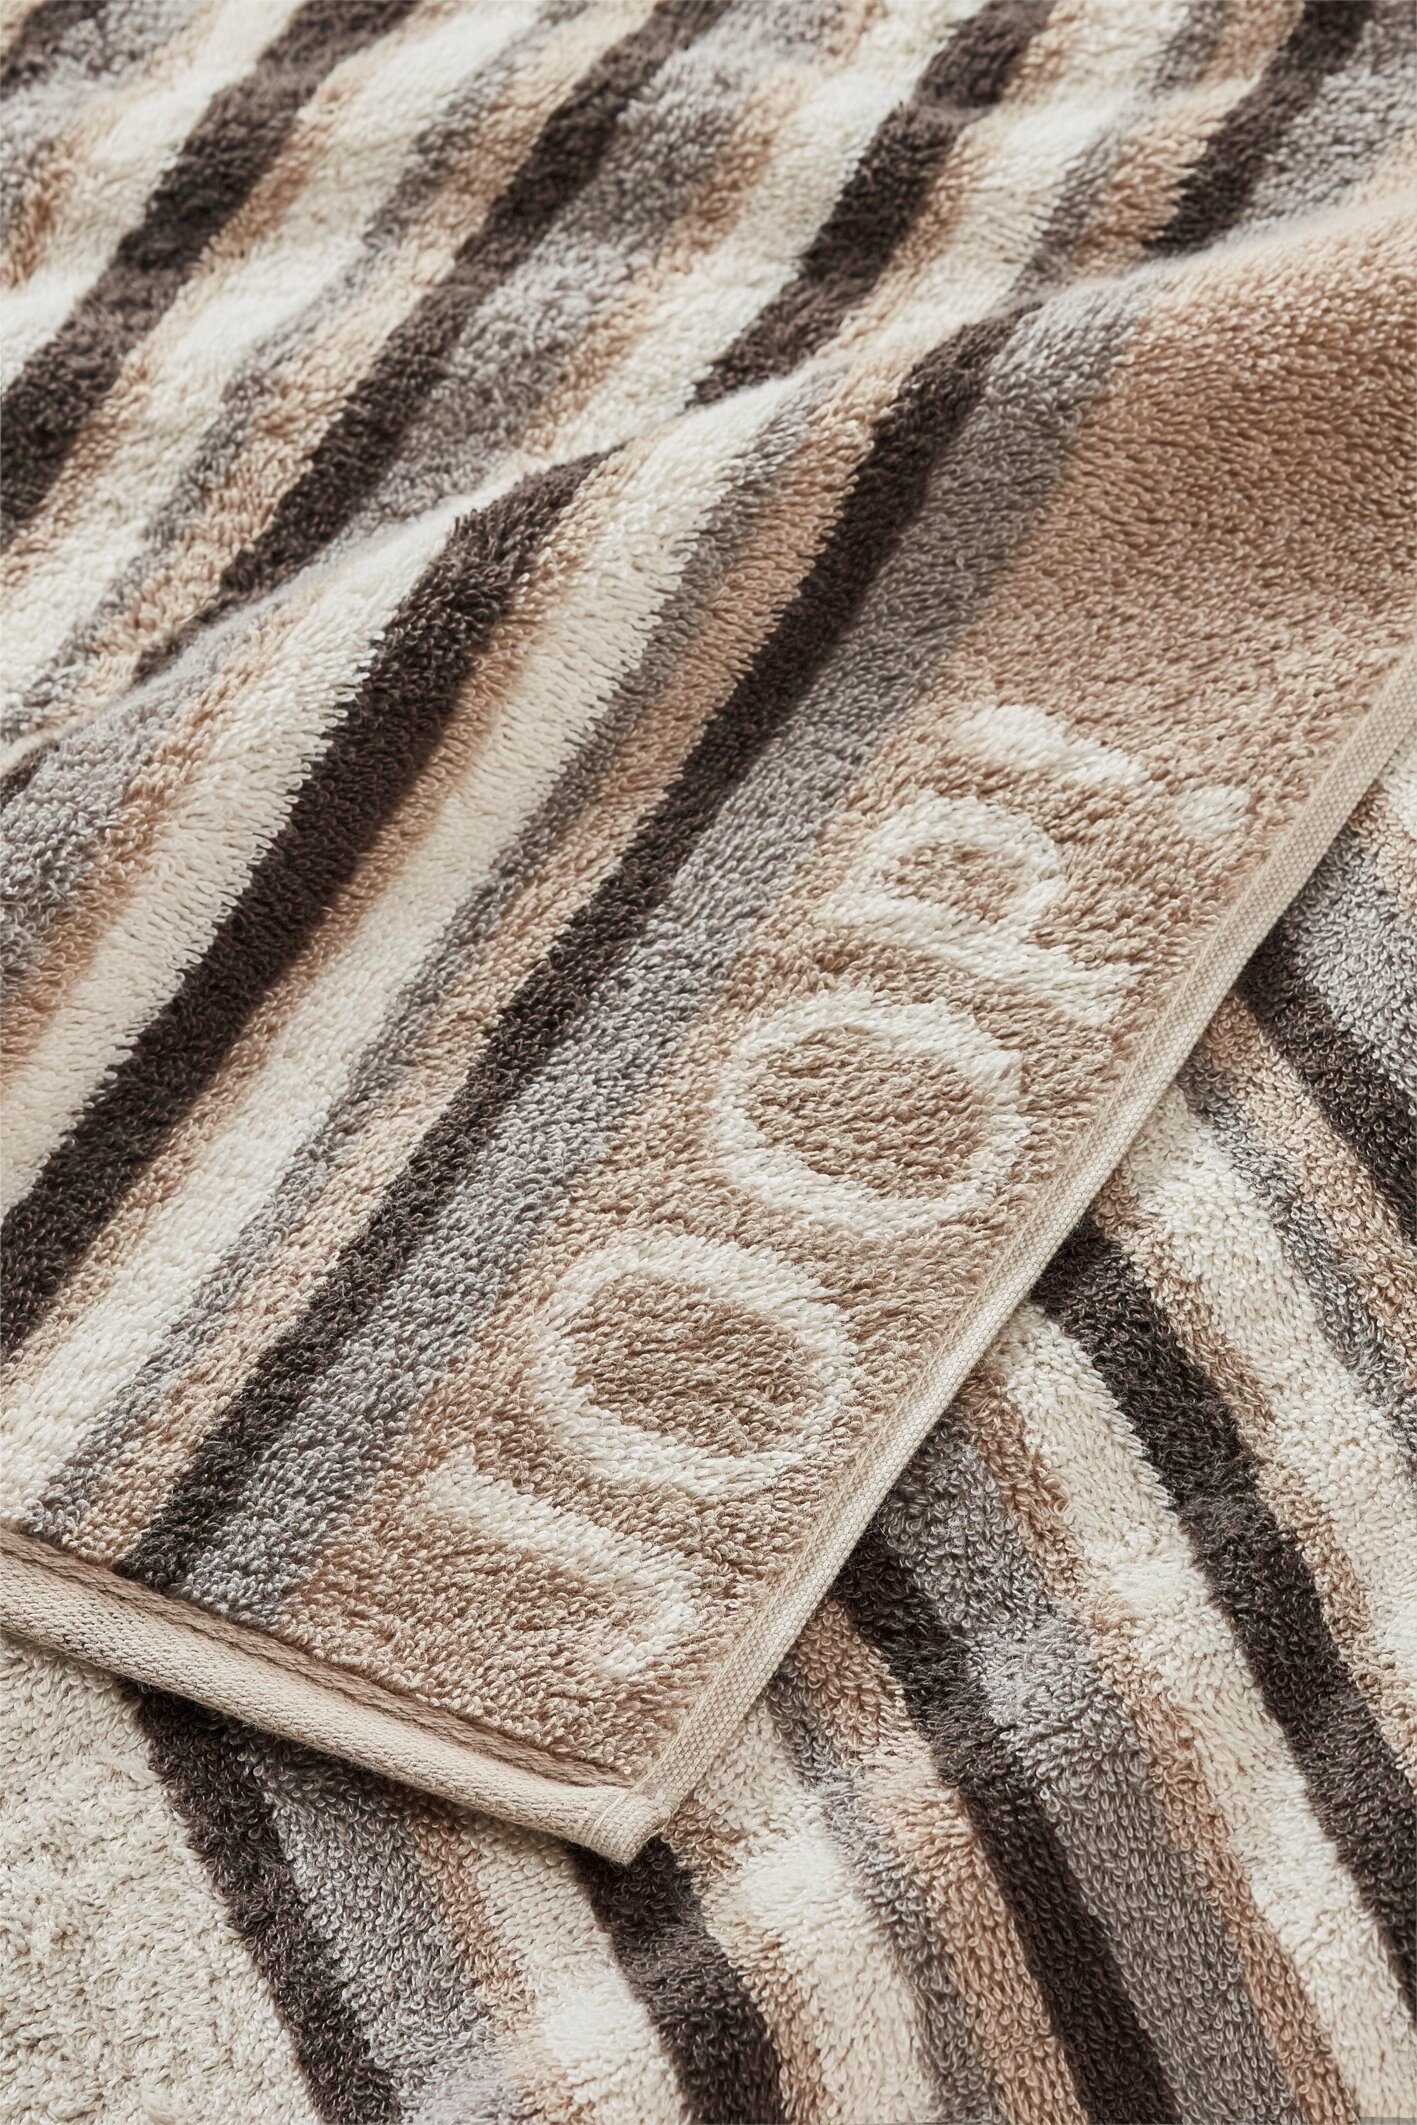 JOOP! STRIPES Textil Handtuch-Set, LIVING Handtücher Joop! MOVE - Sand (2-St)